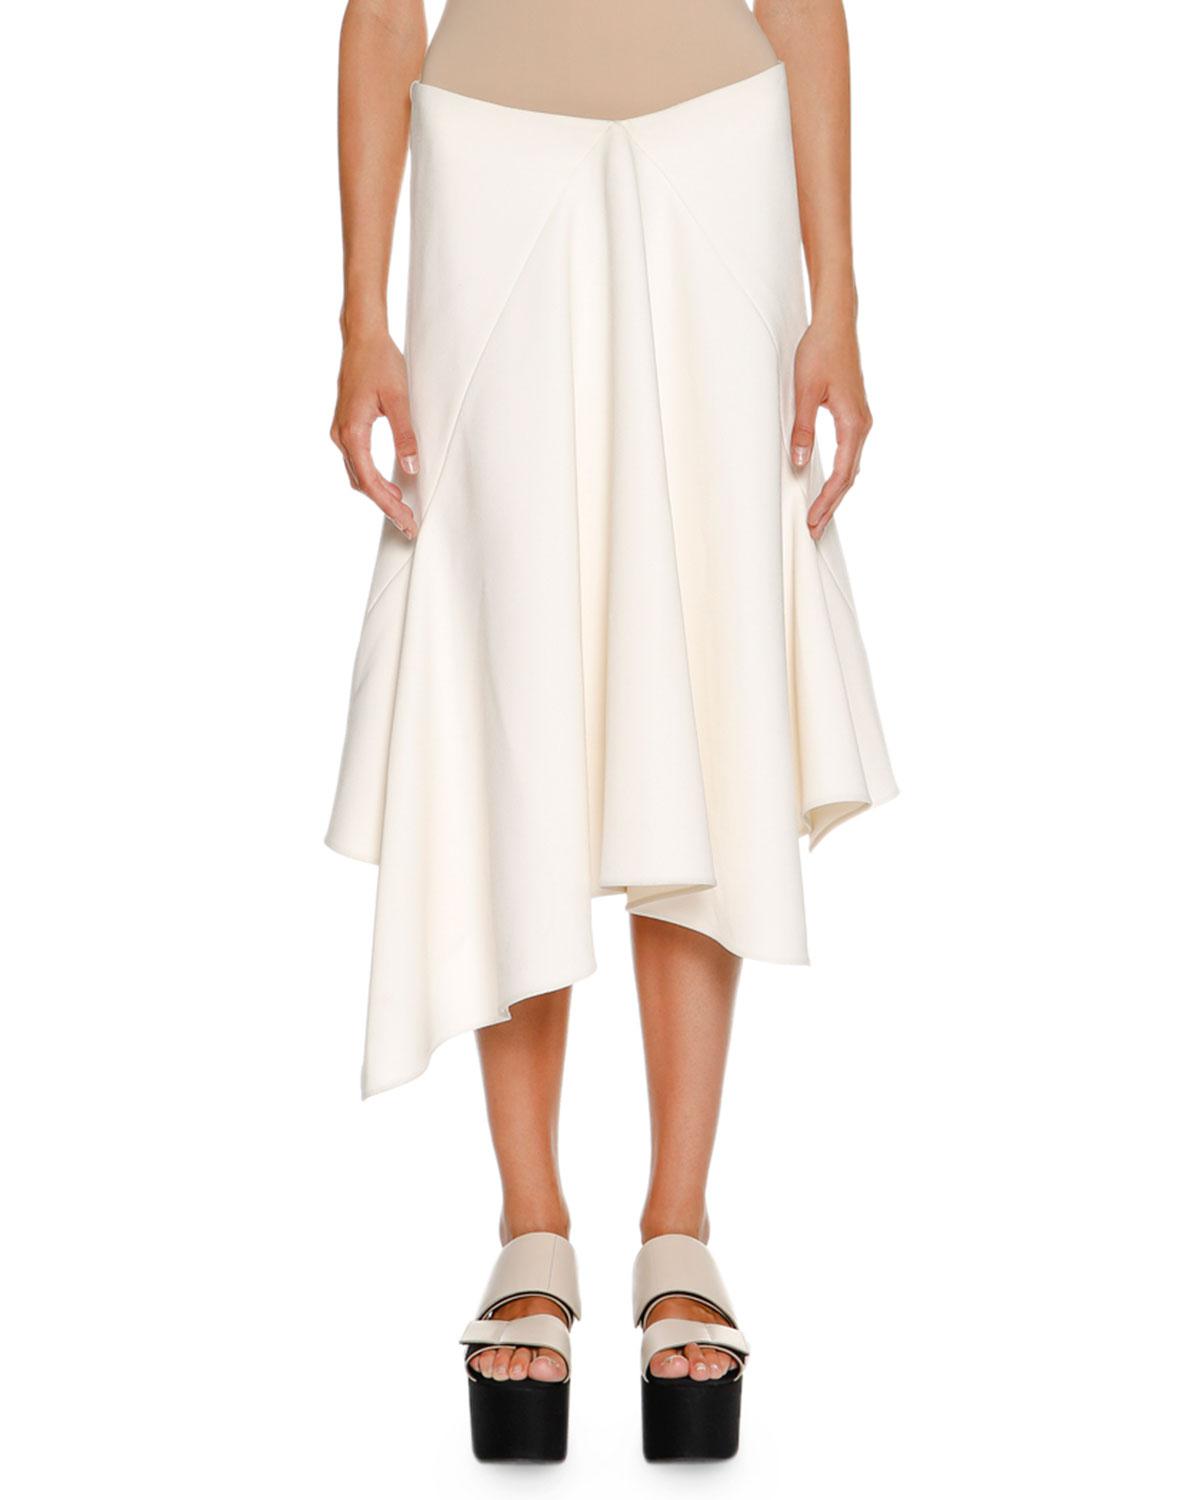 Lyst - Marni Handkerchief-hem A-line Skirt in White